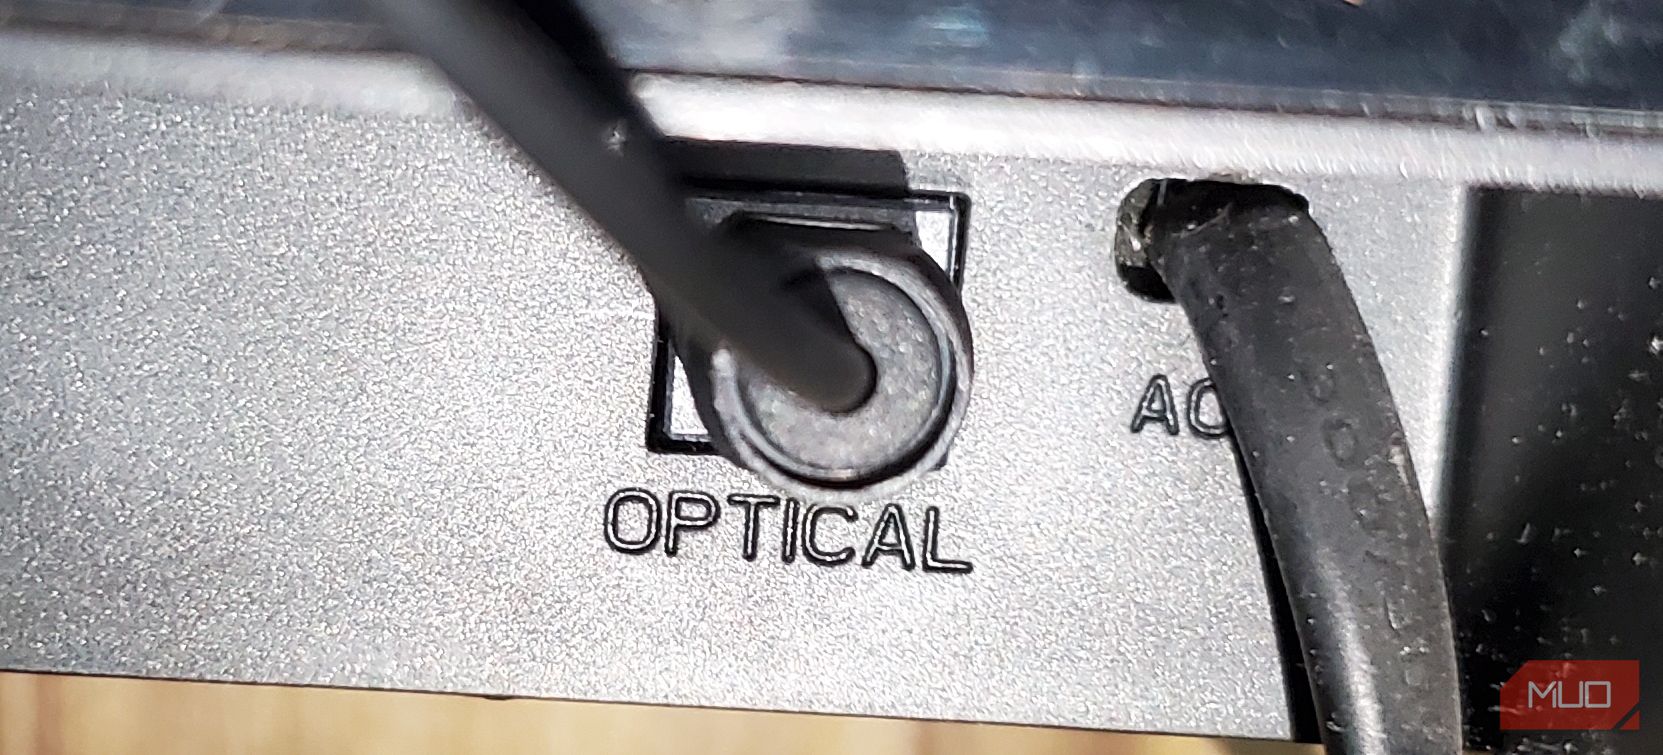 An optical cable plugged to the optical port of a Hisense soundbar